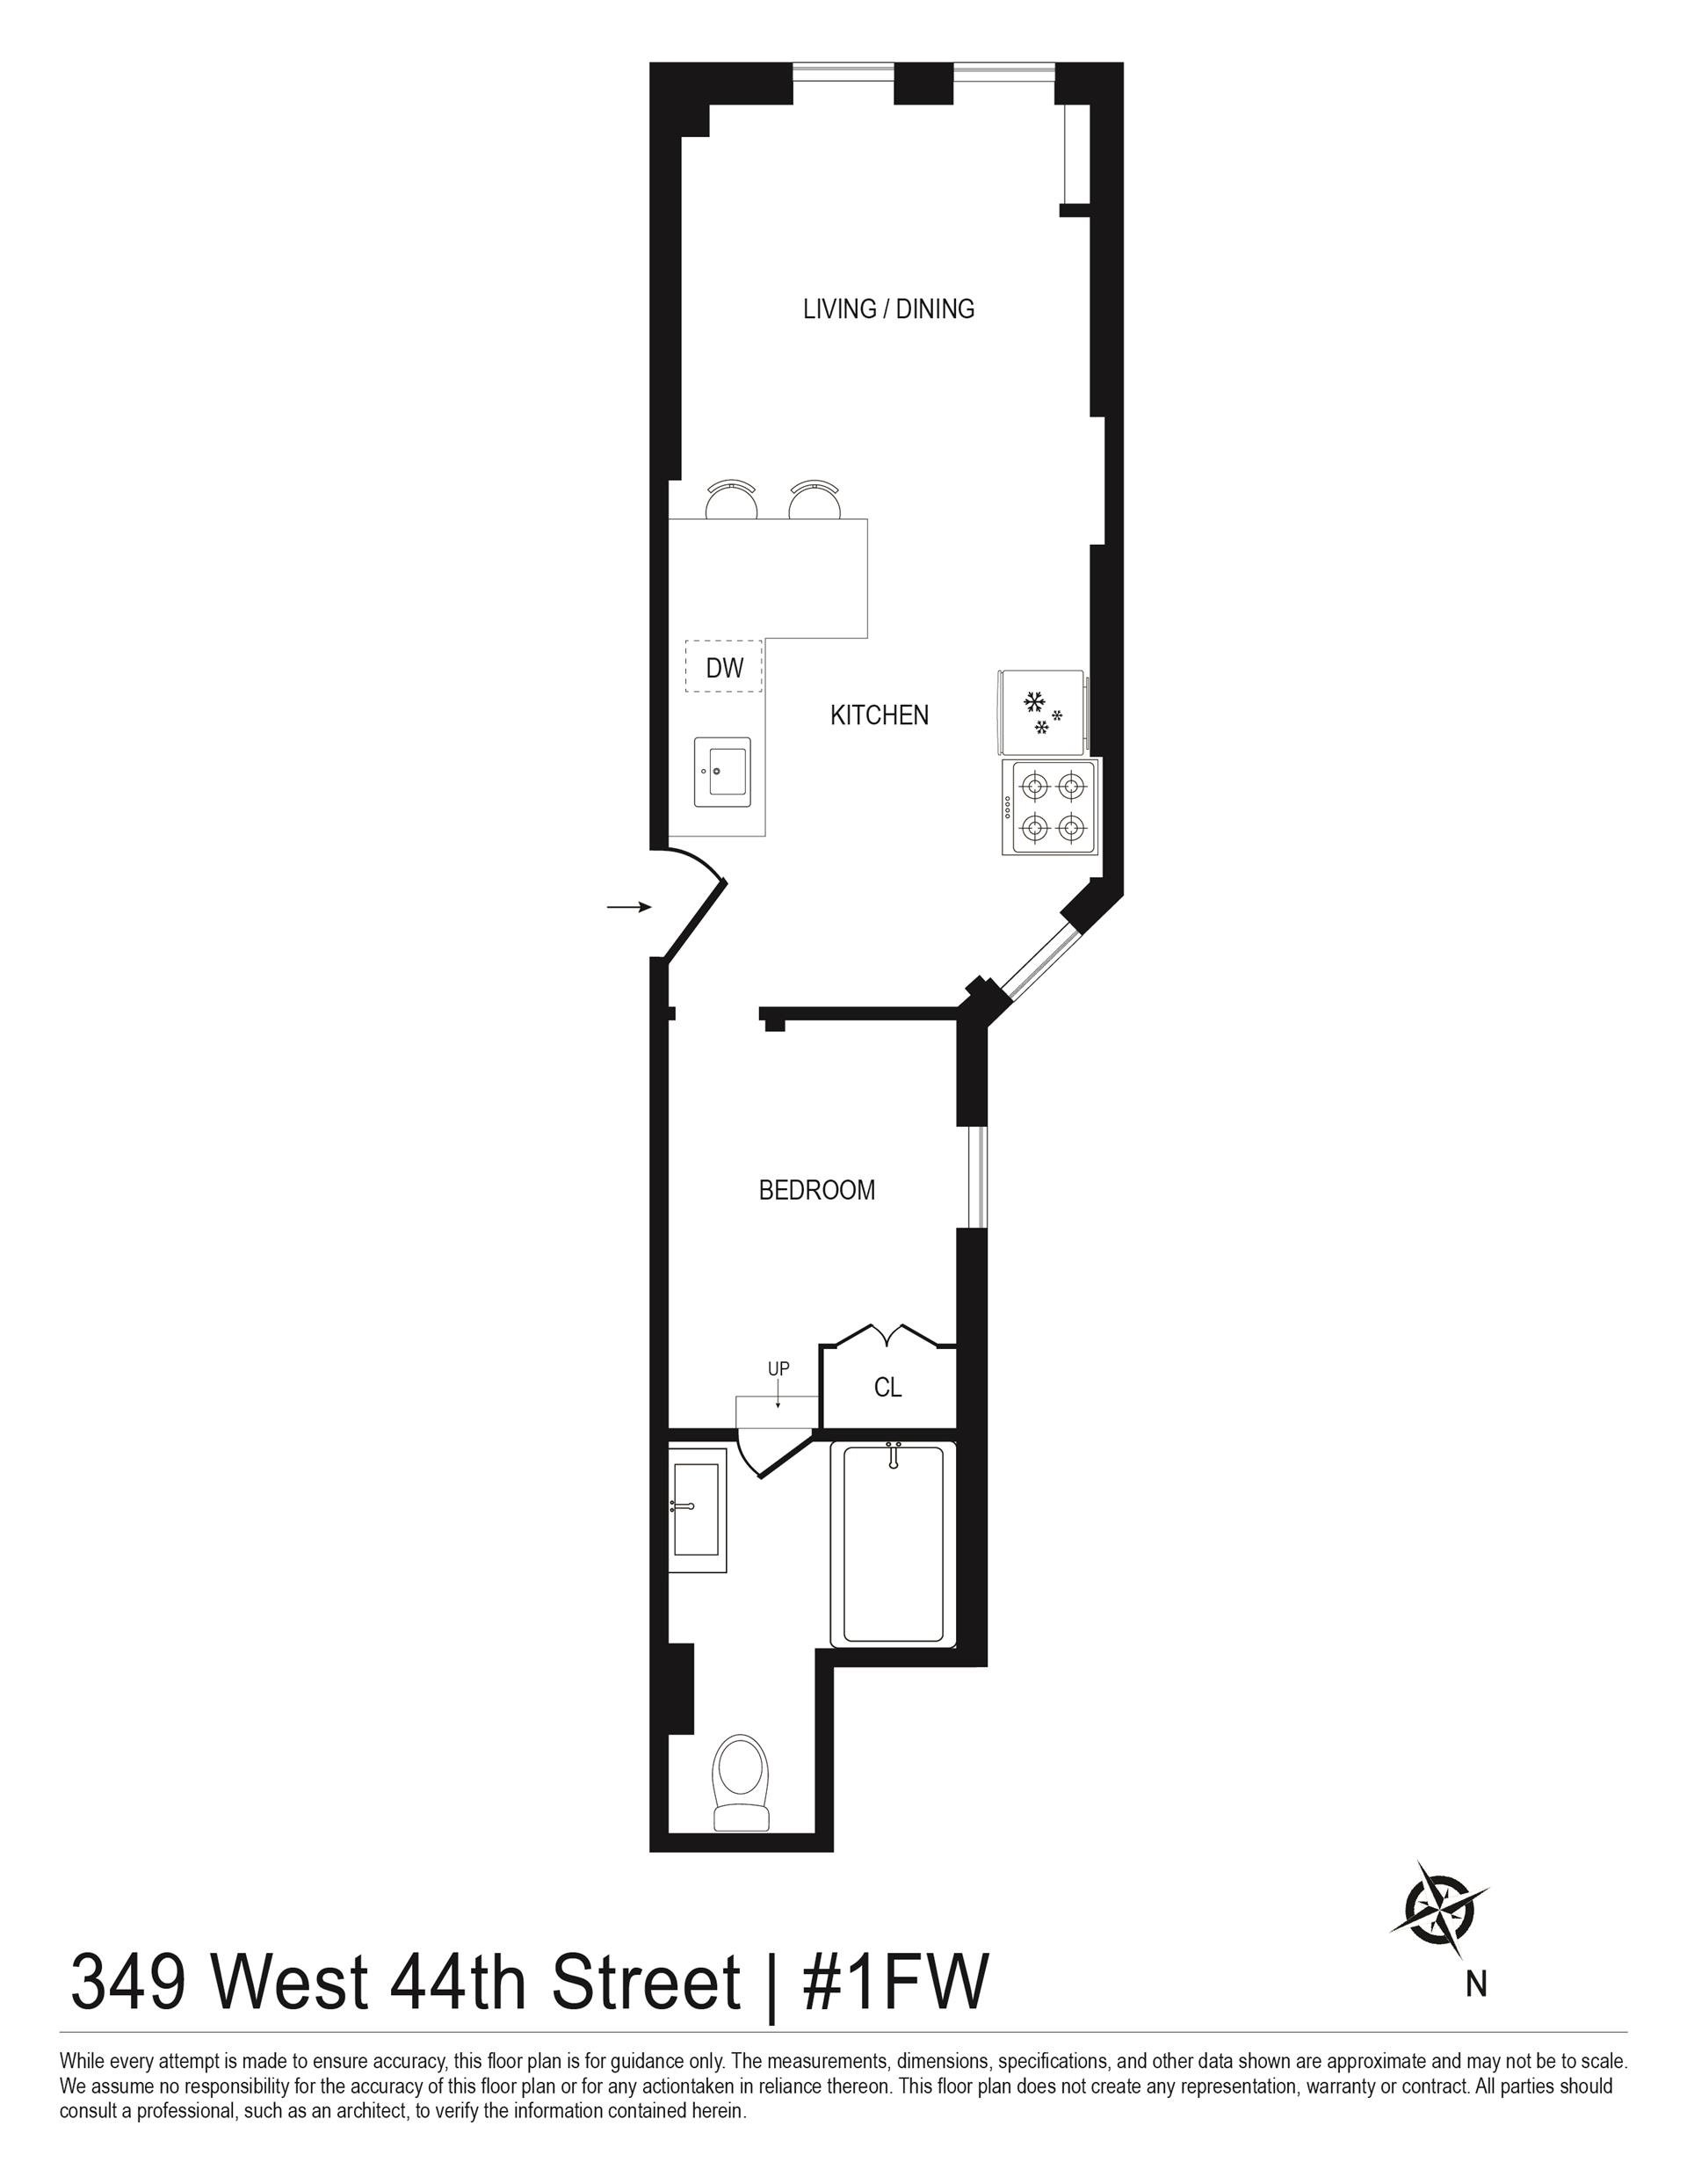 Floorplan for 349 West 44th Street, 1FW